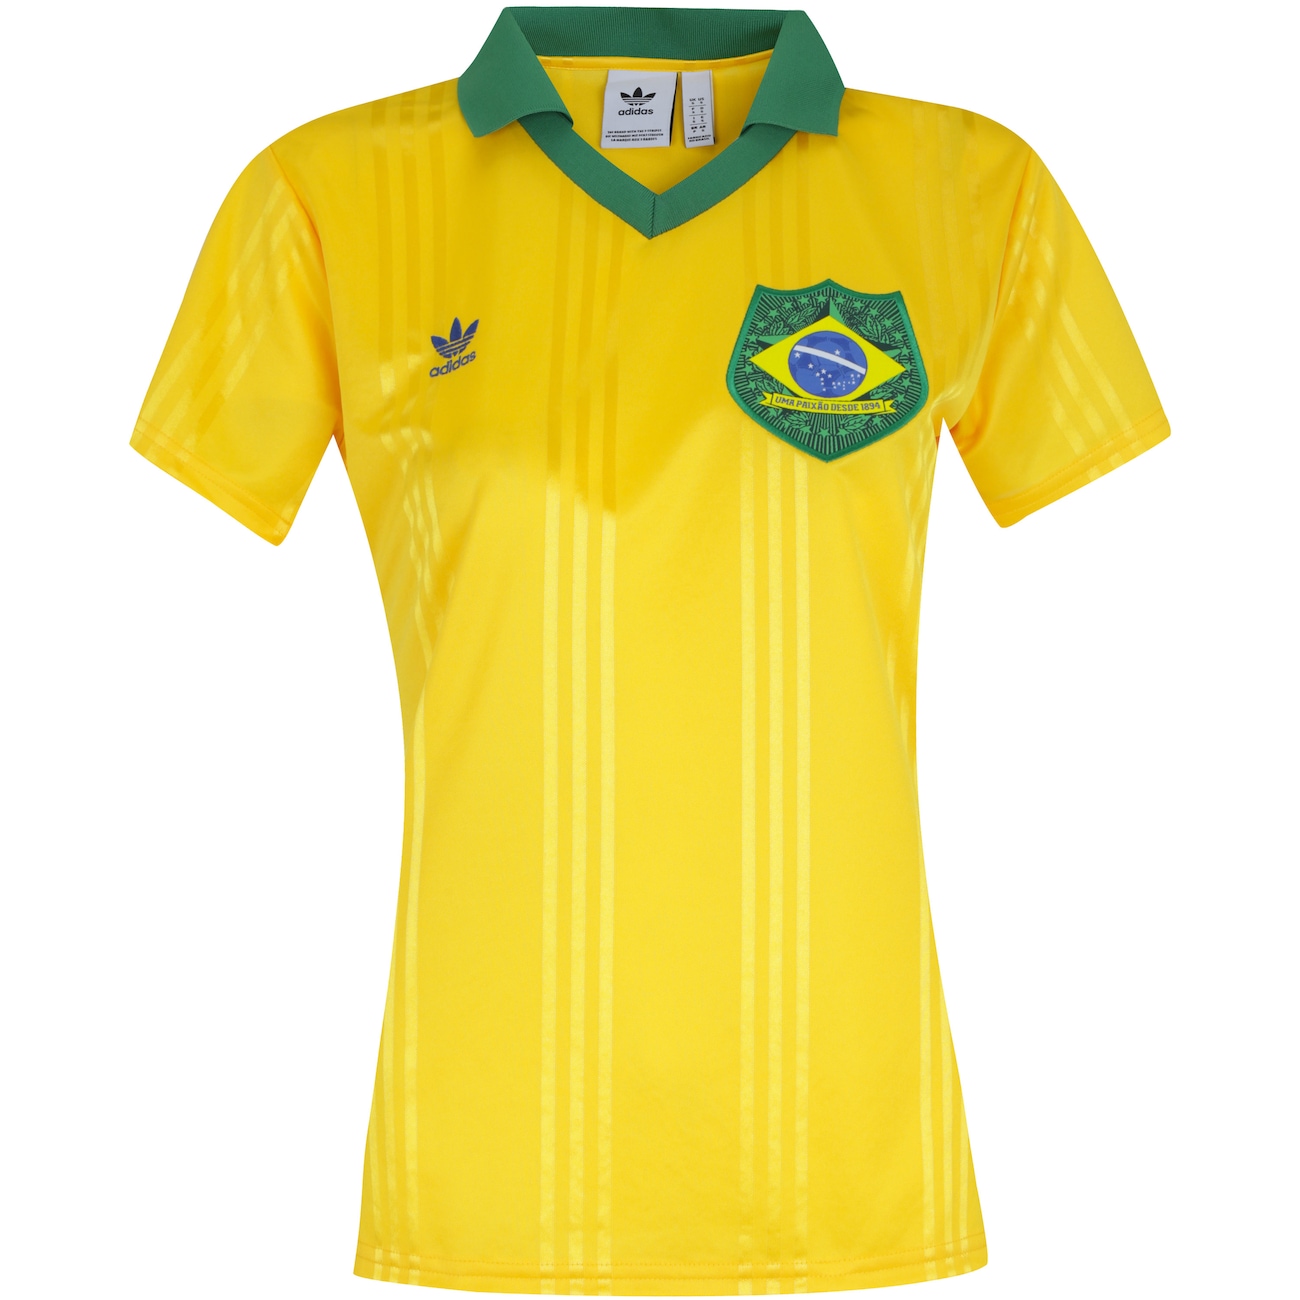 Camisa do Brasil adidas - Feminina